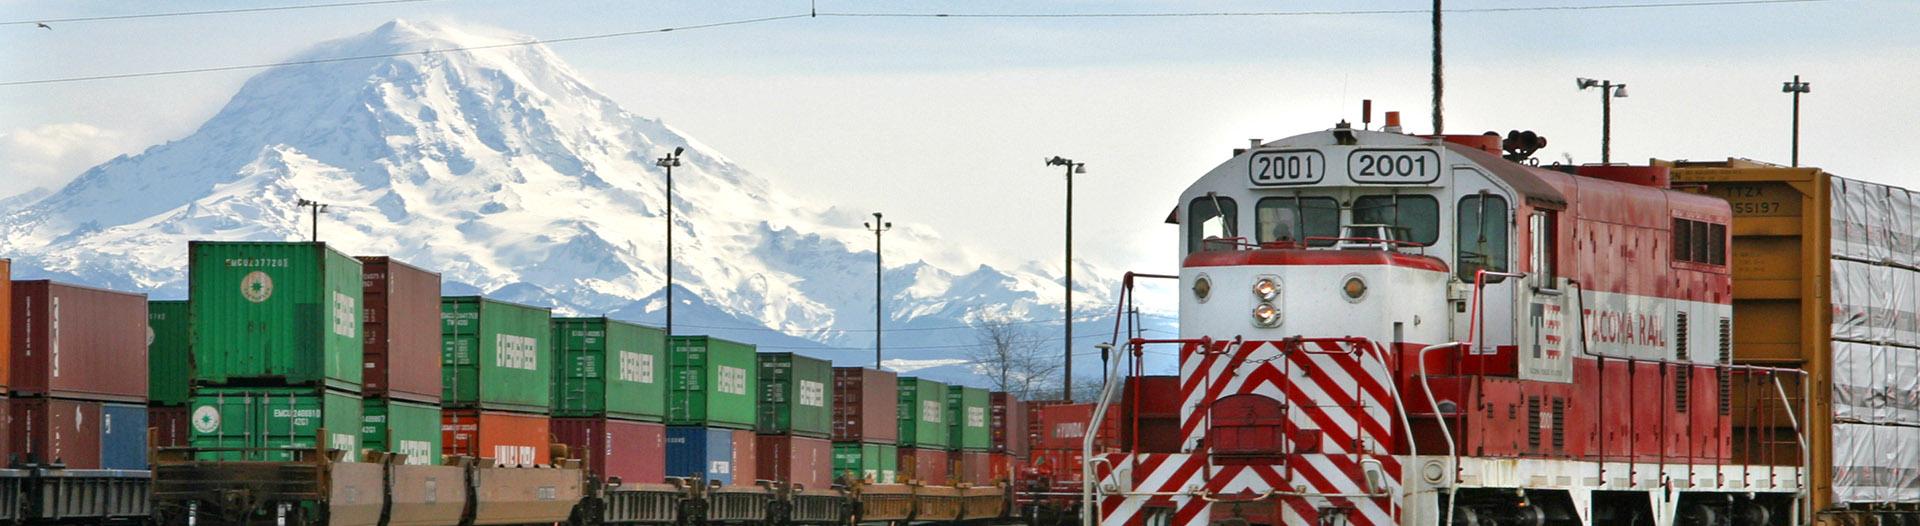 Tacoma Rail in front of Rainier